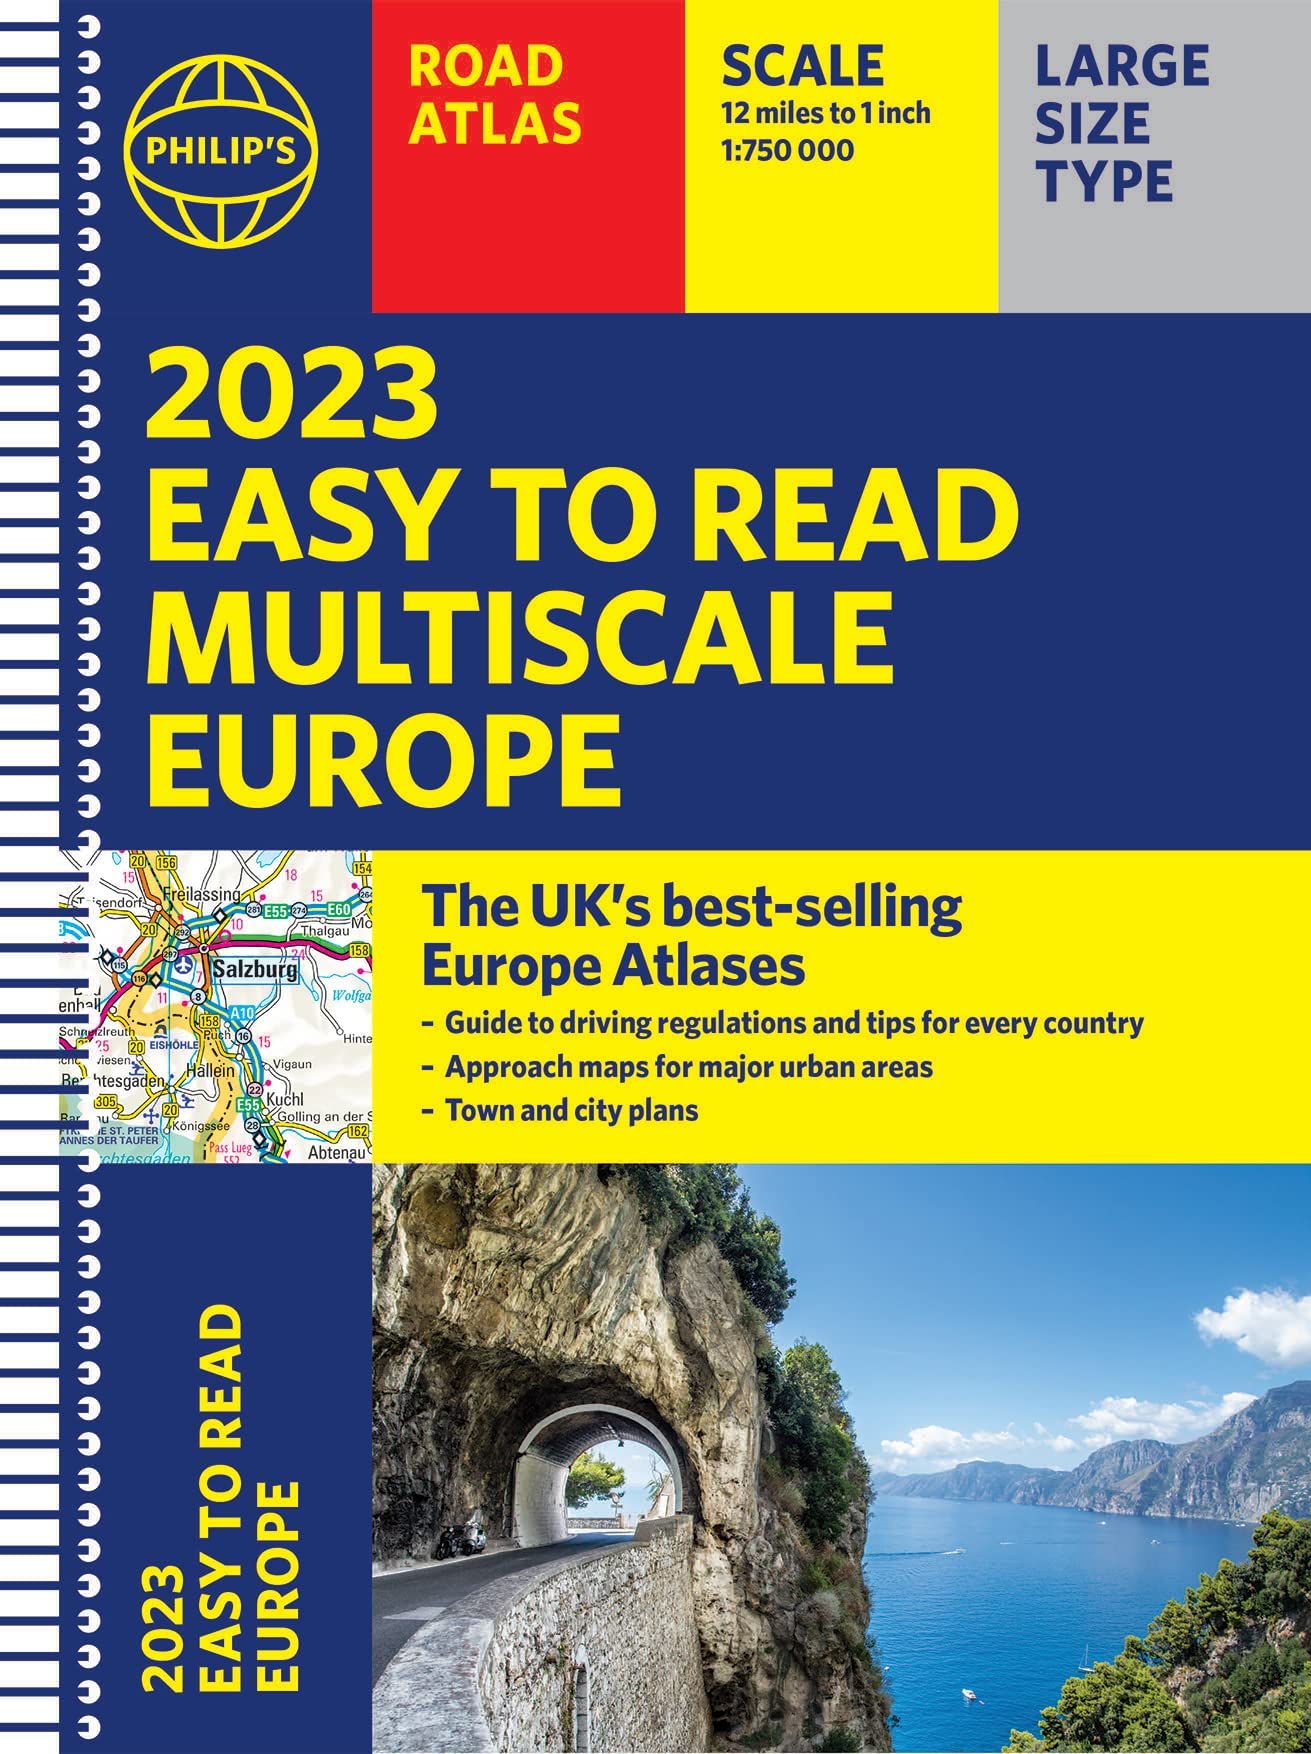 Europe Easy Read Road Atlas by Philip's (2023)